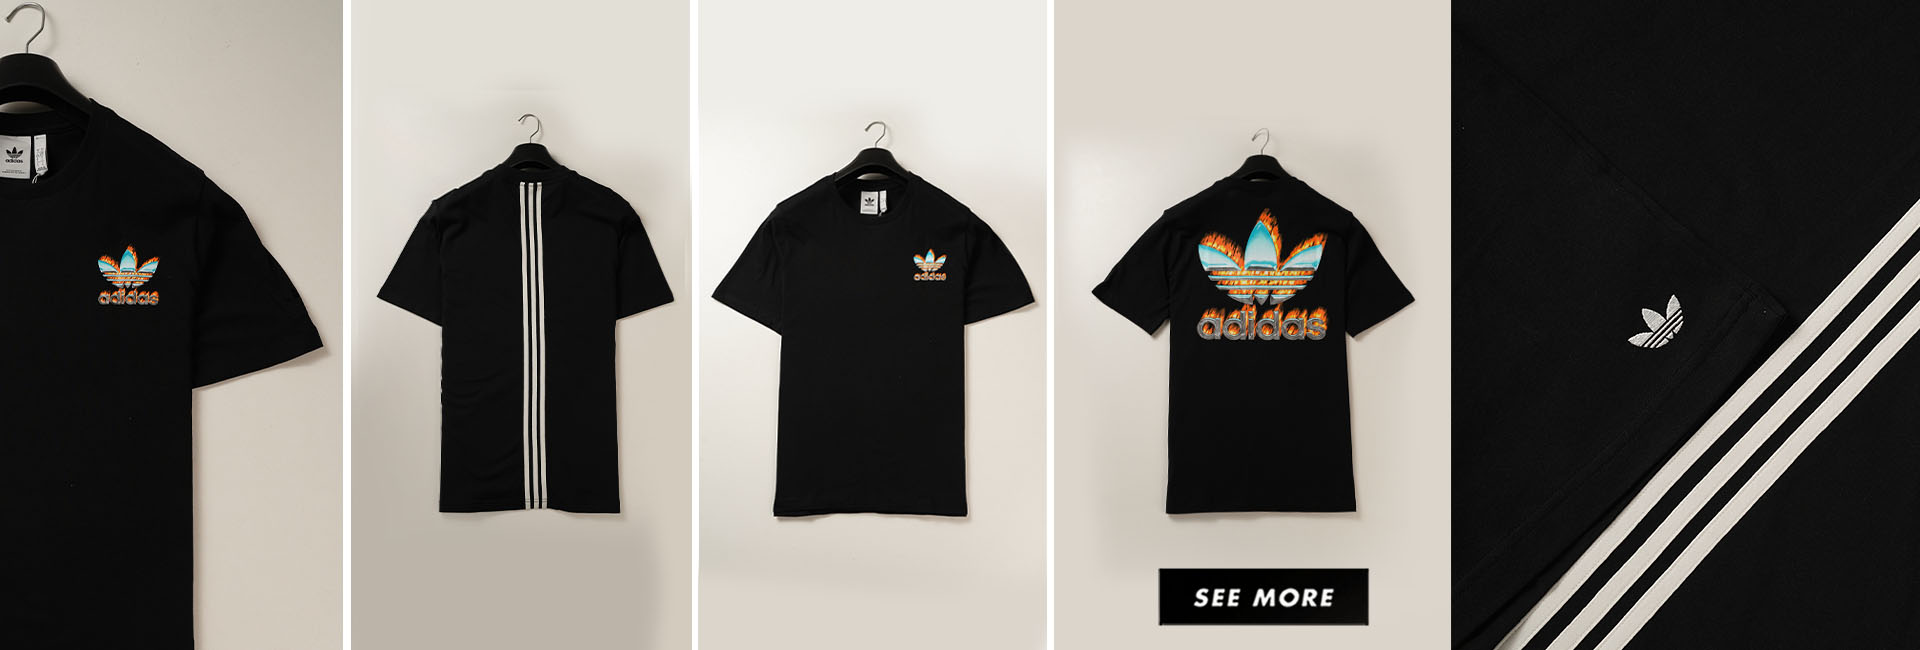 Buy Adidas Originals T-Shirt Range | Products Online Store | Side